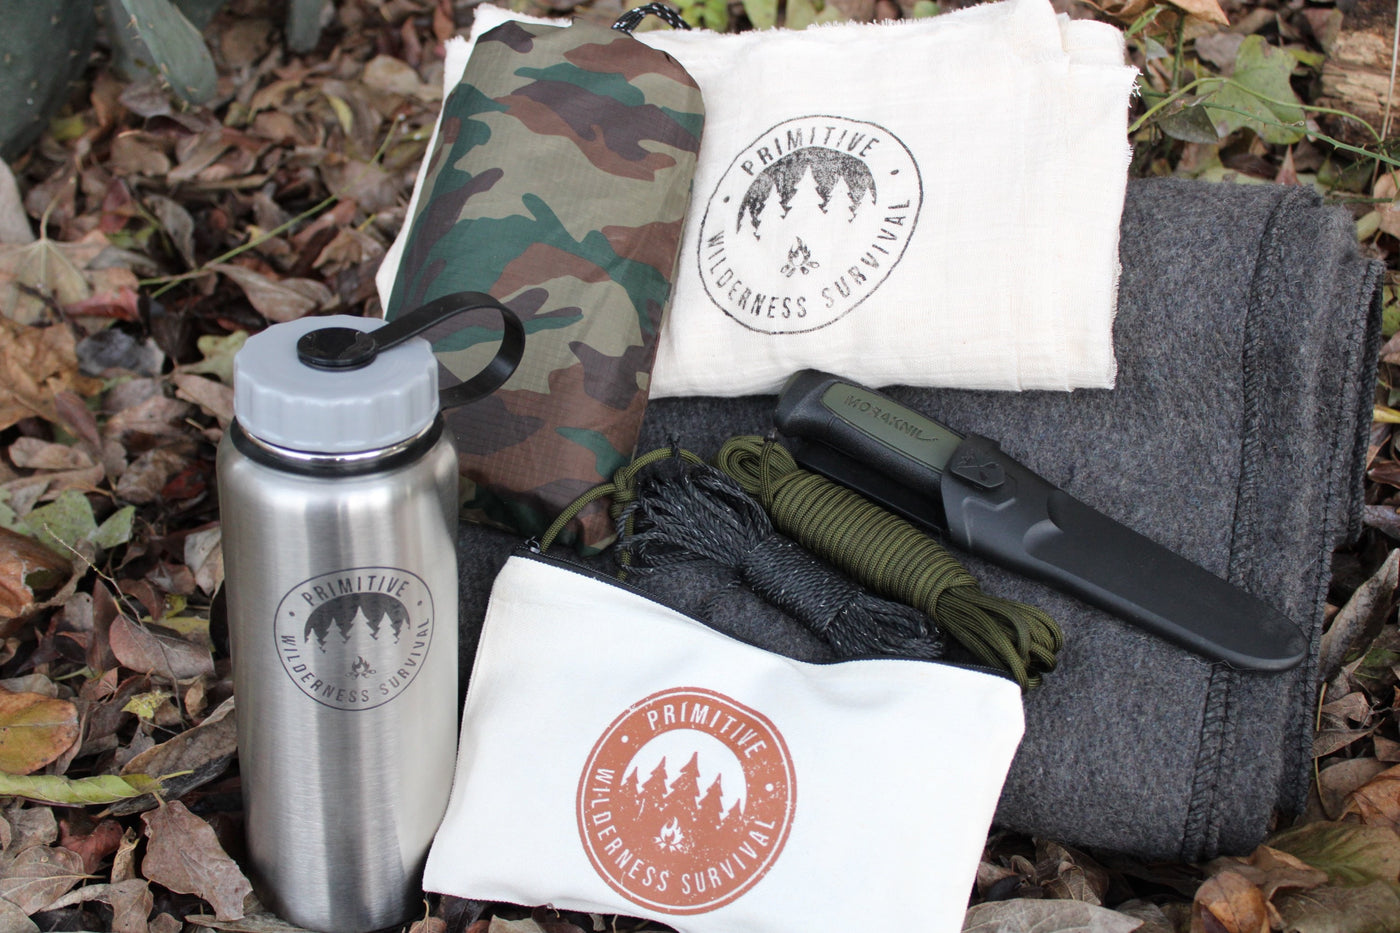 Primitive Wilderness Survival Student Kit